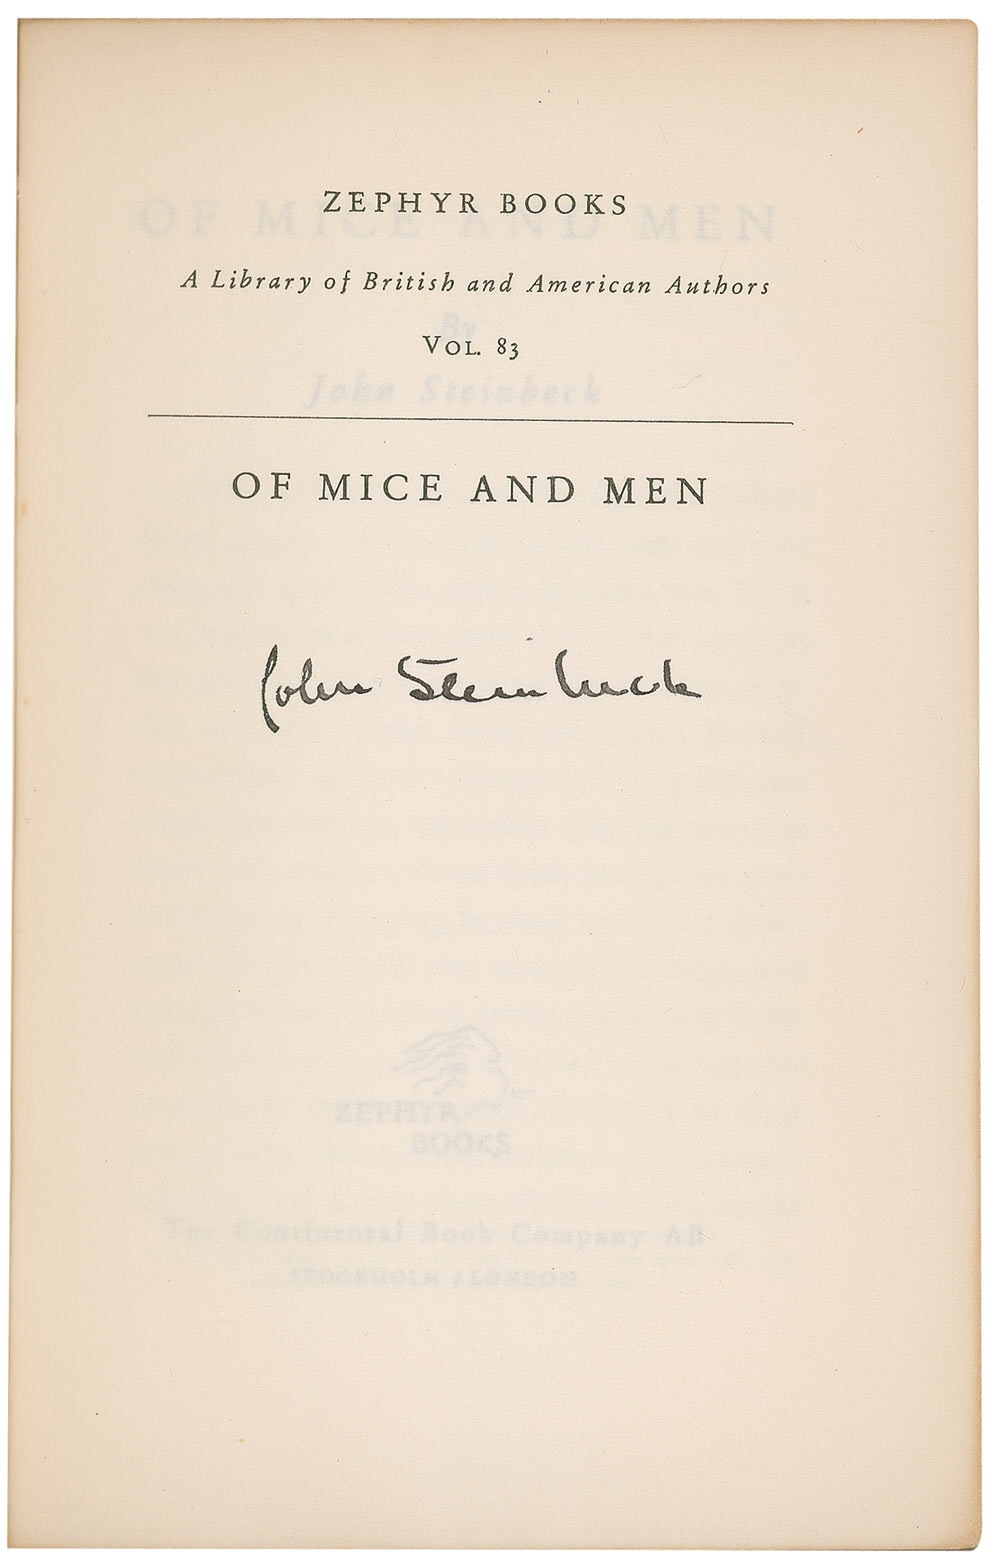 Lot #733 John Steinbeck